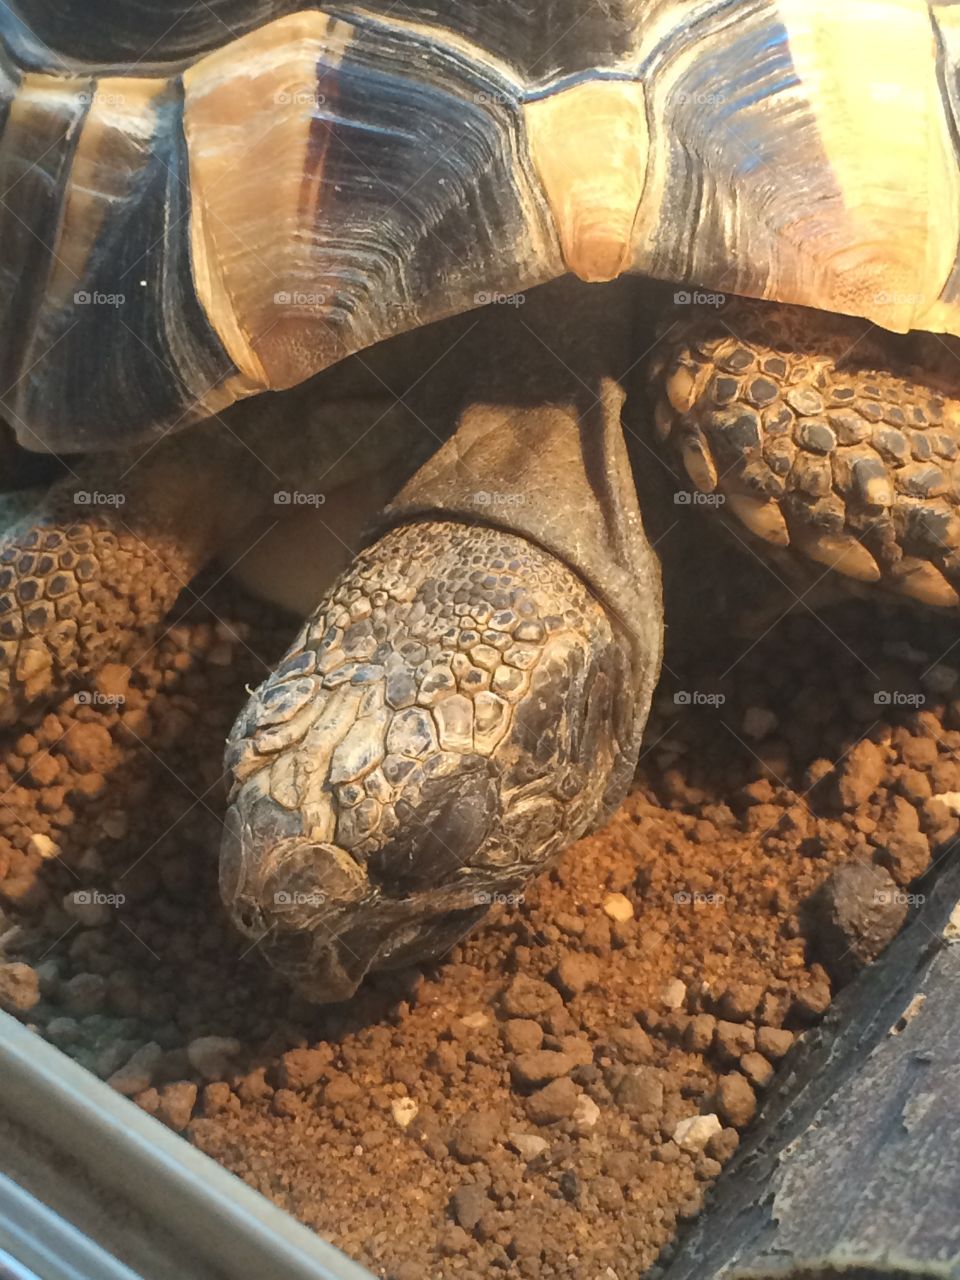 My tortoise 